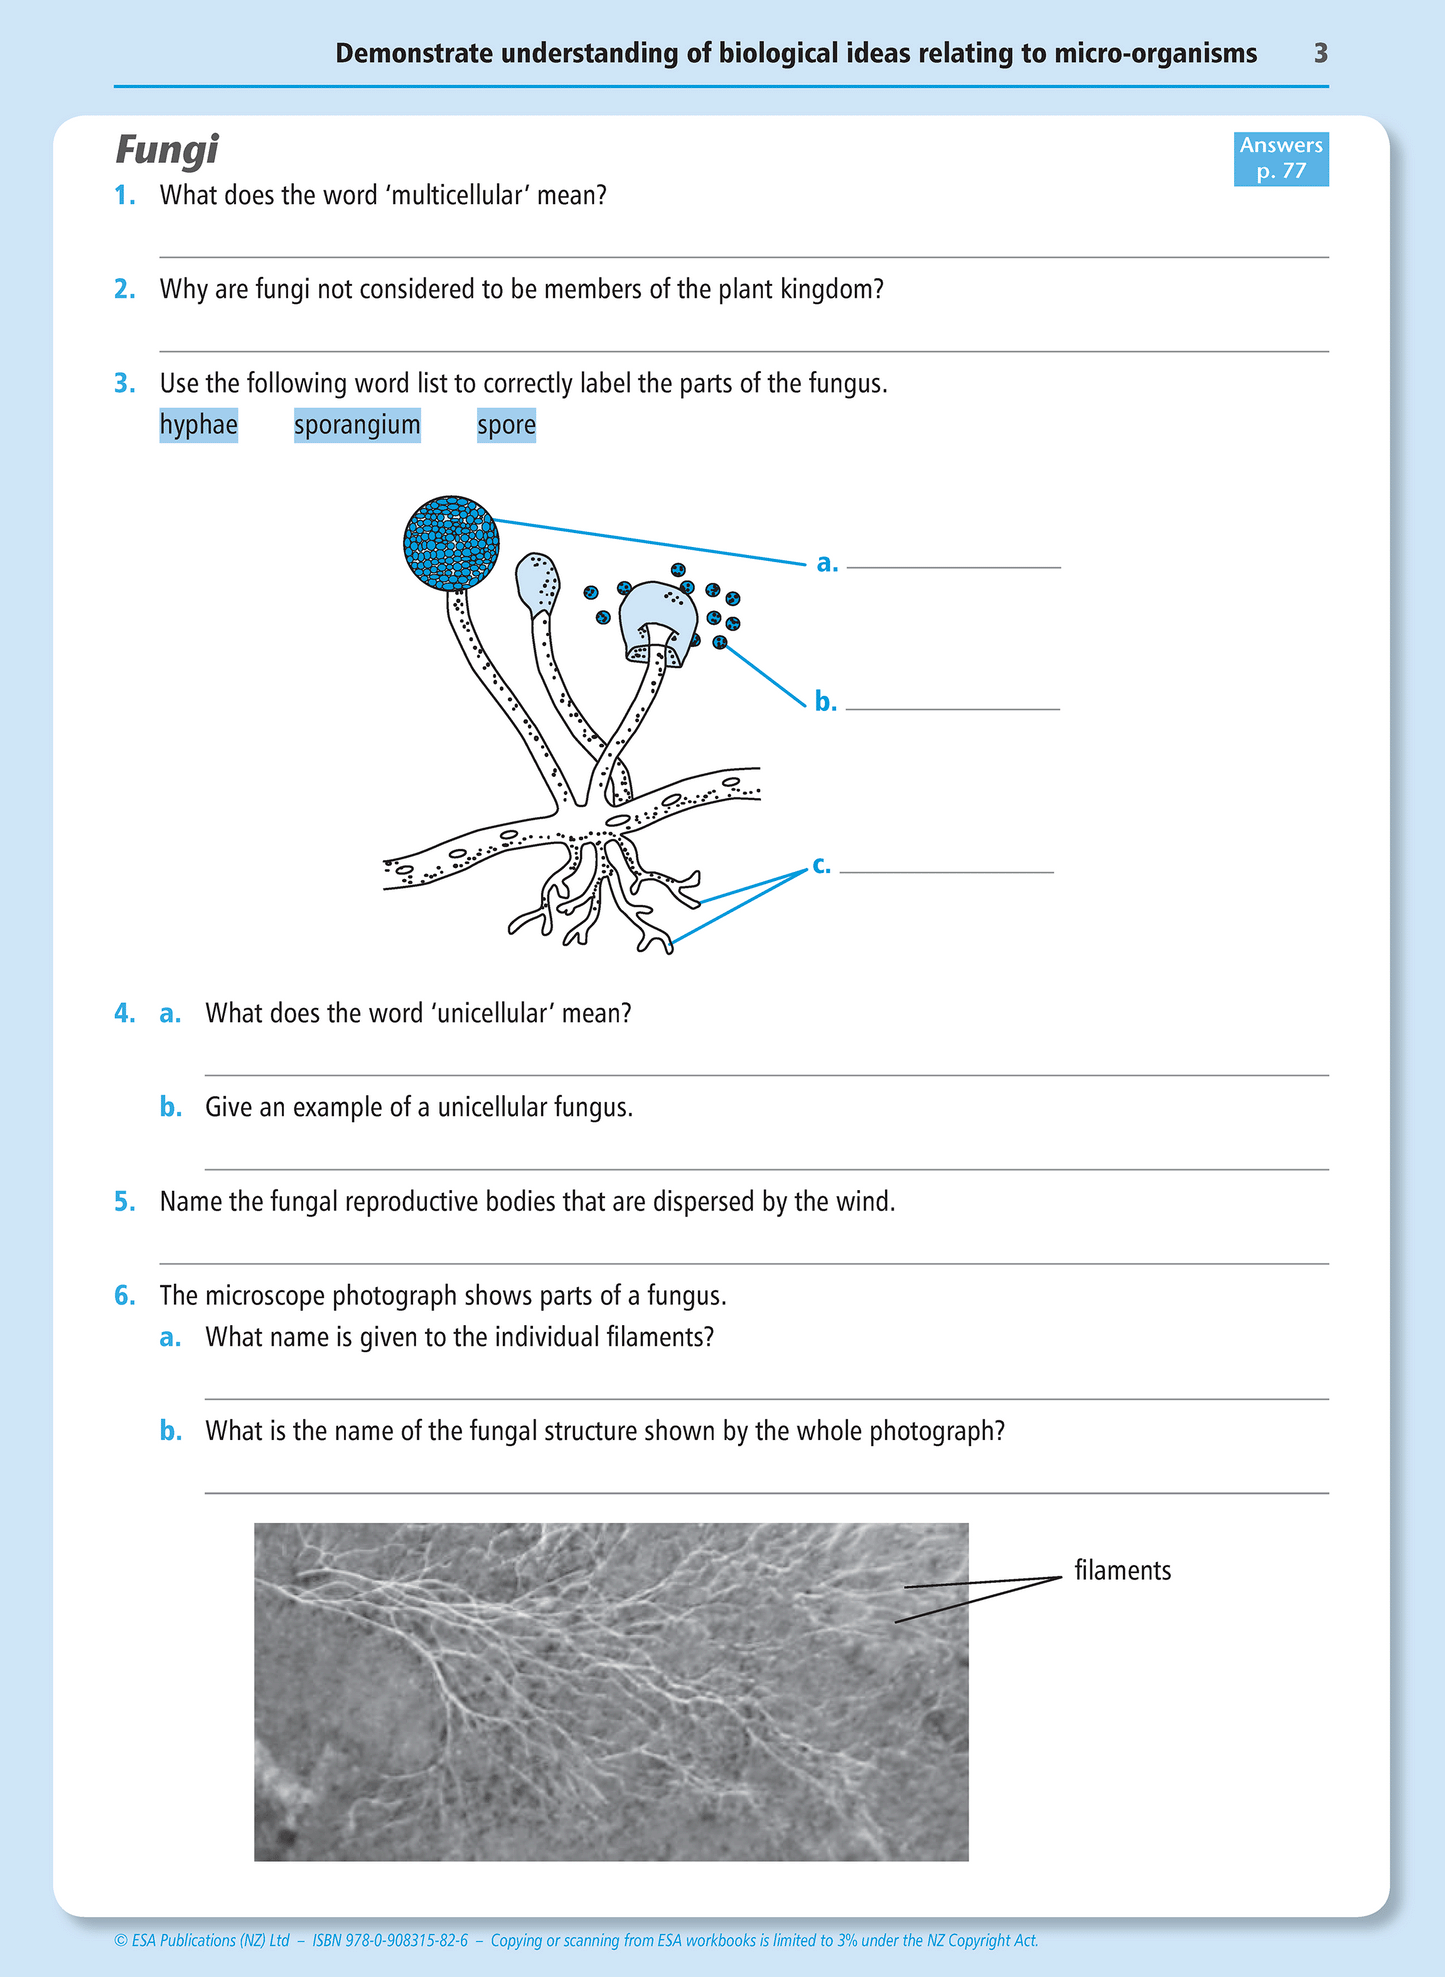 Level 1 Micro-organisms 1.3 Learning Workbook